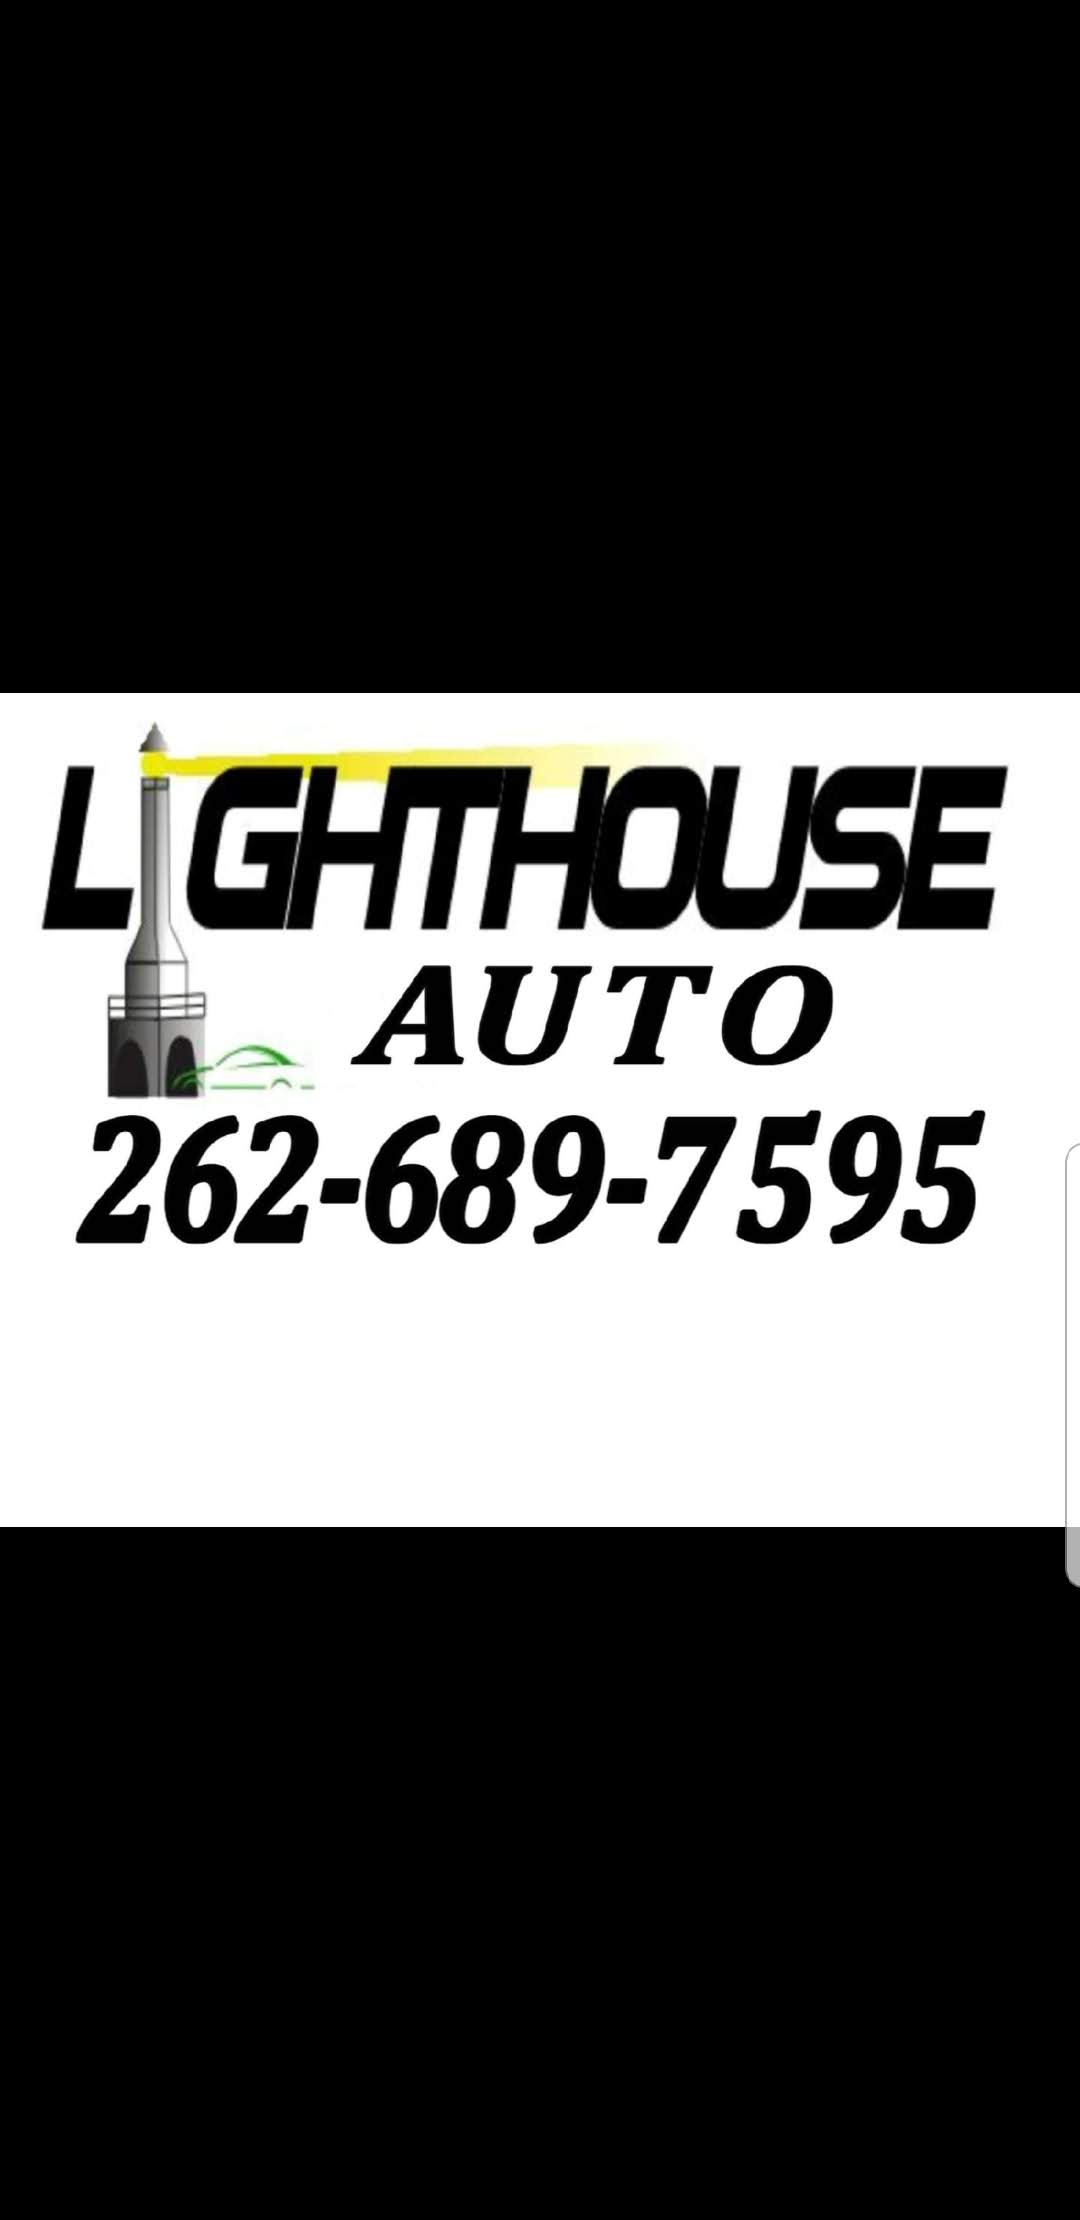 Contact - LIGHTHOUSE AUTO